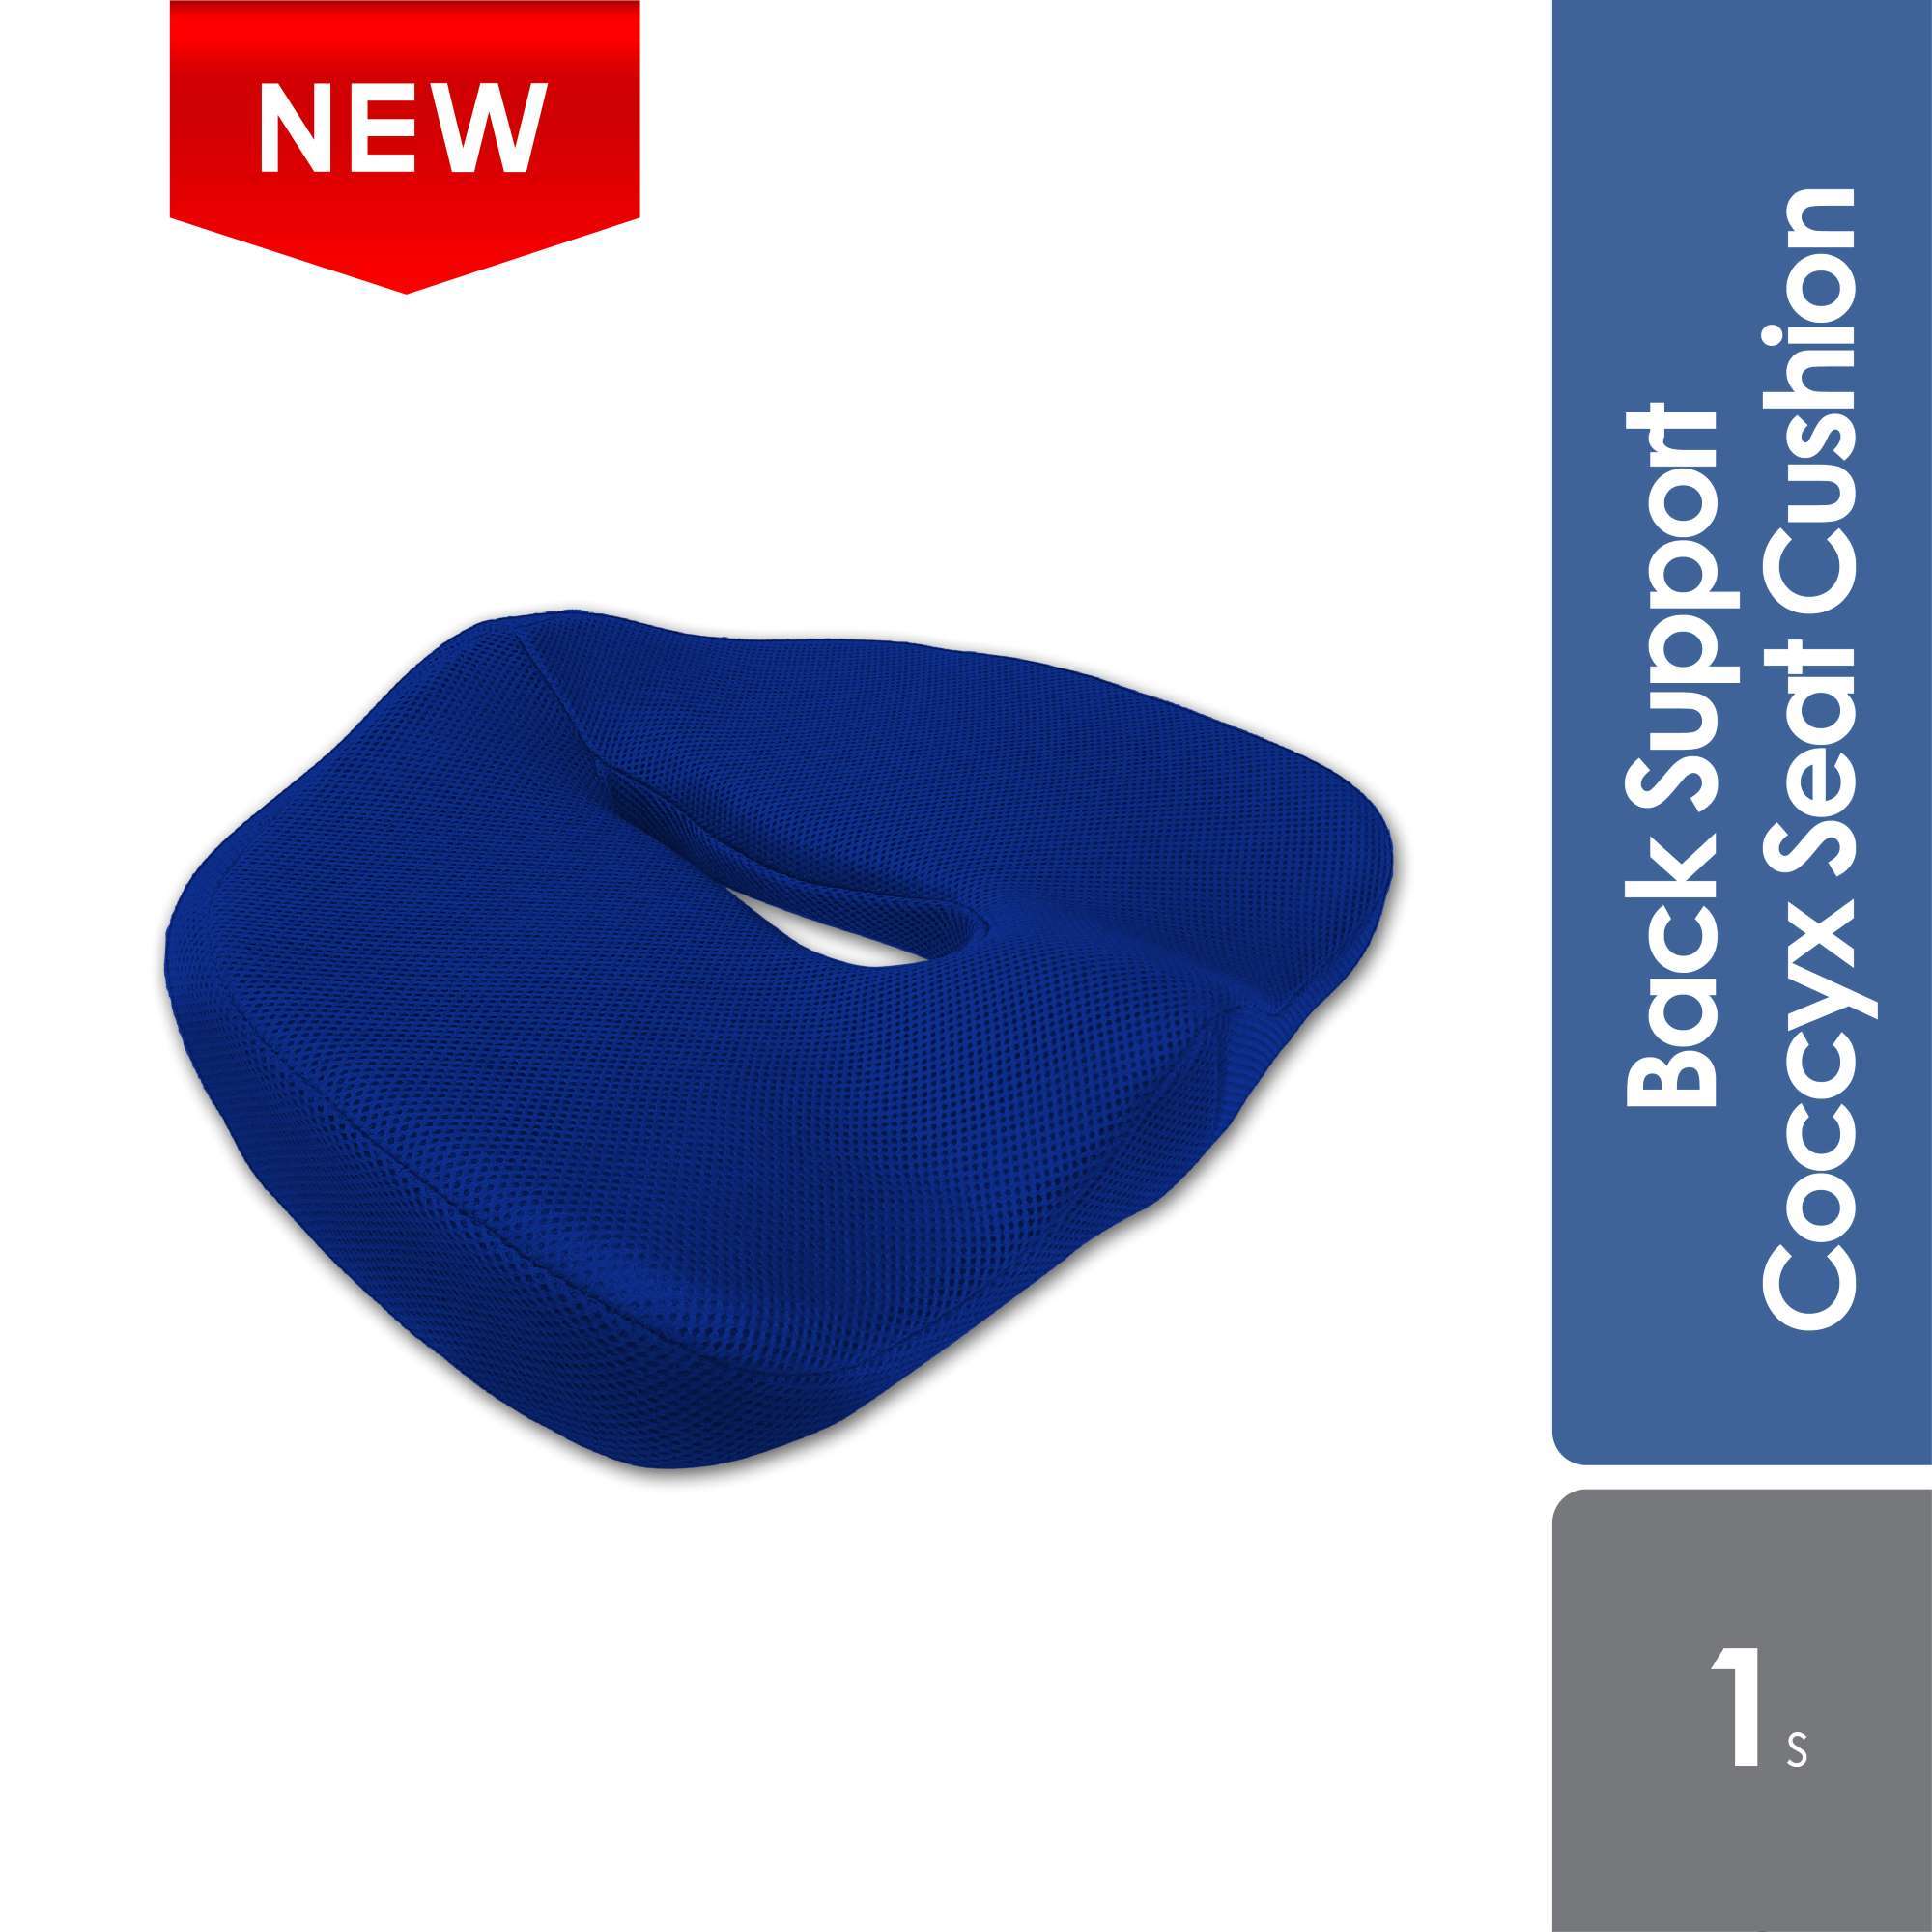 Bestmade Coccyx Memory Foam Seat Cushion